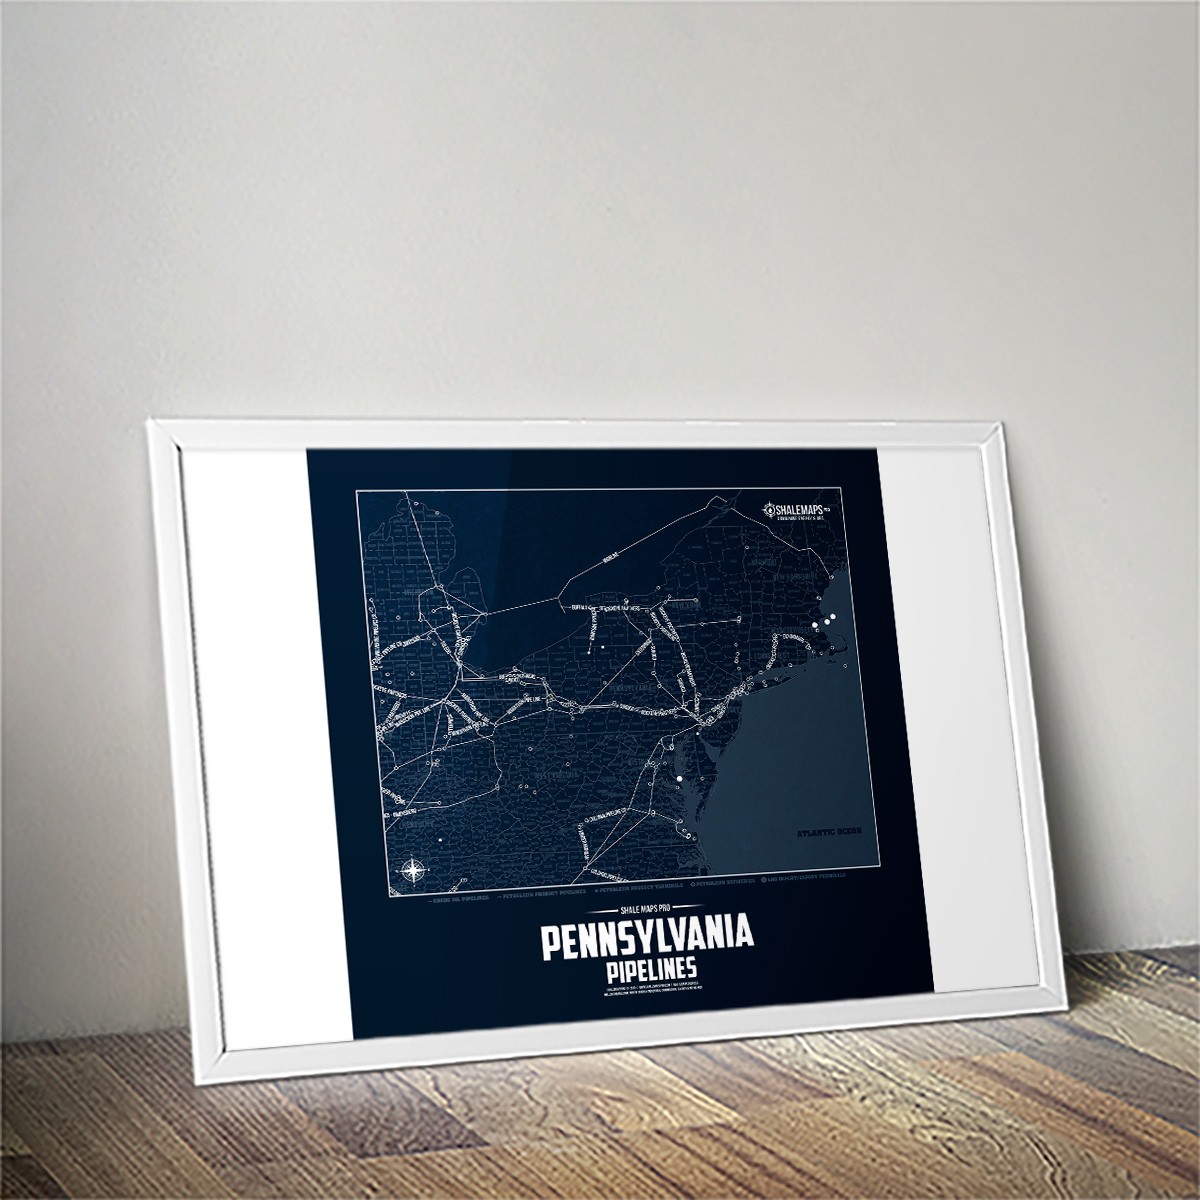 Pennsylvania Oil & Gas Pipelines Blueprint